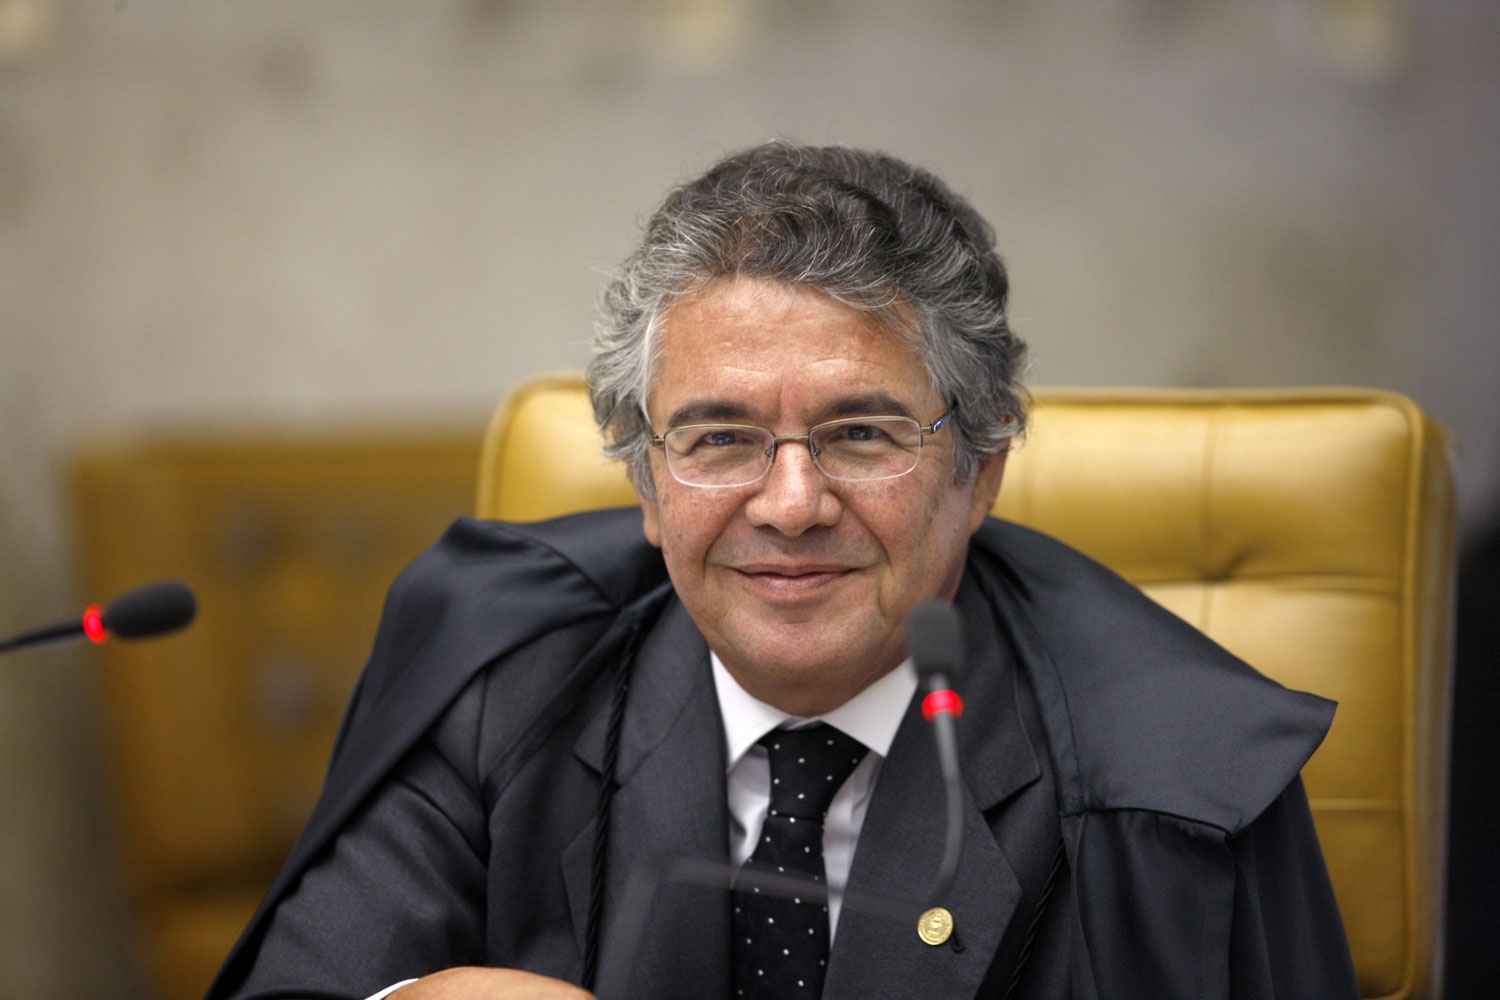 Marco Aurélio Mello